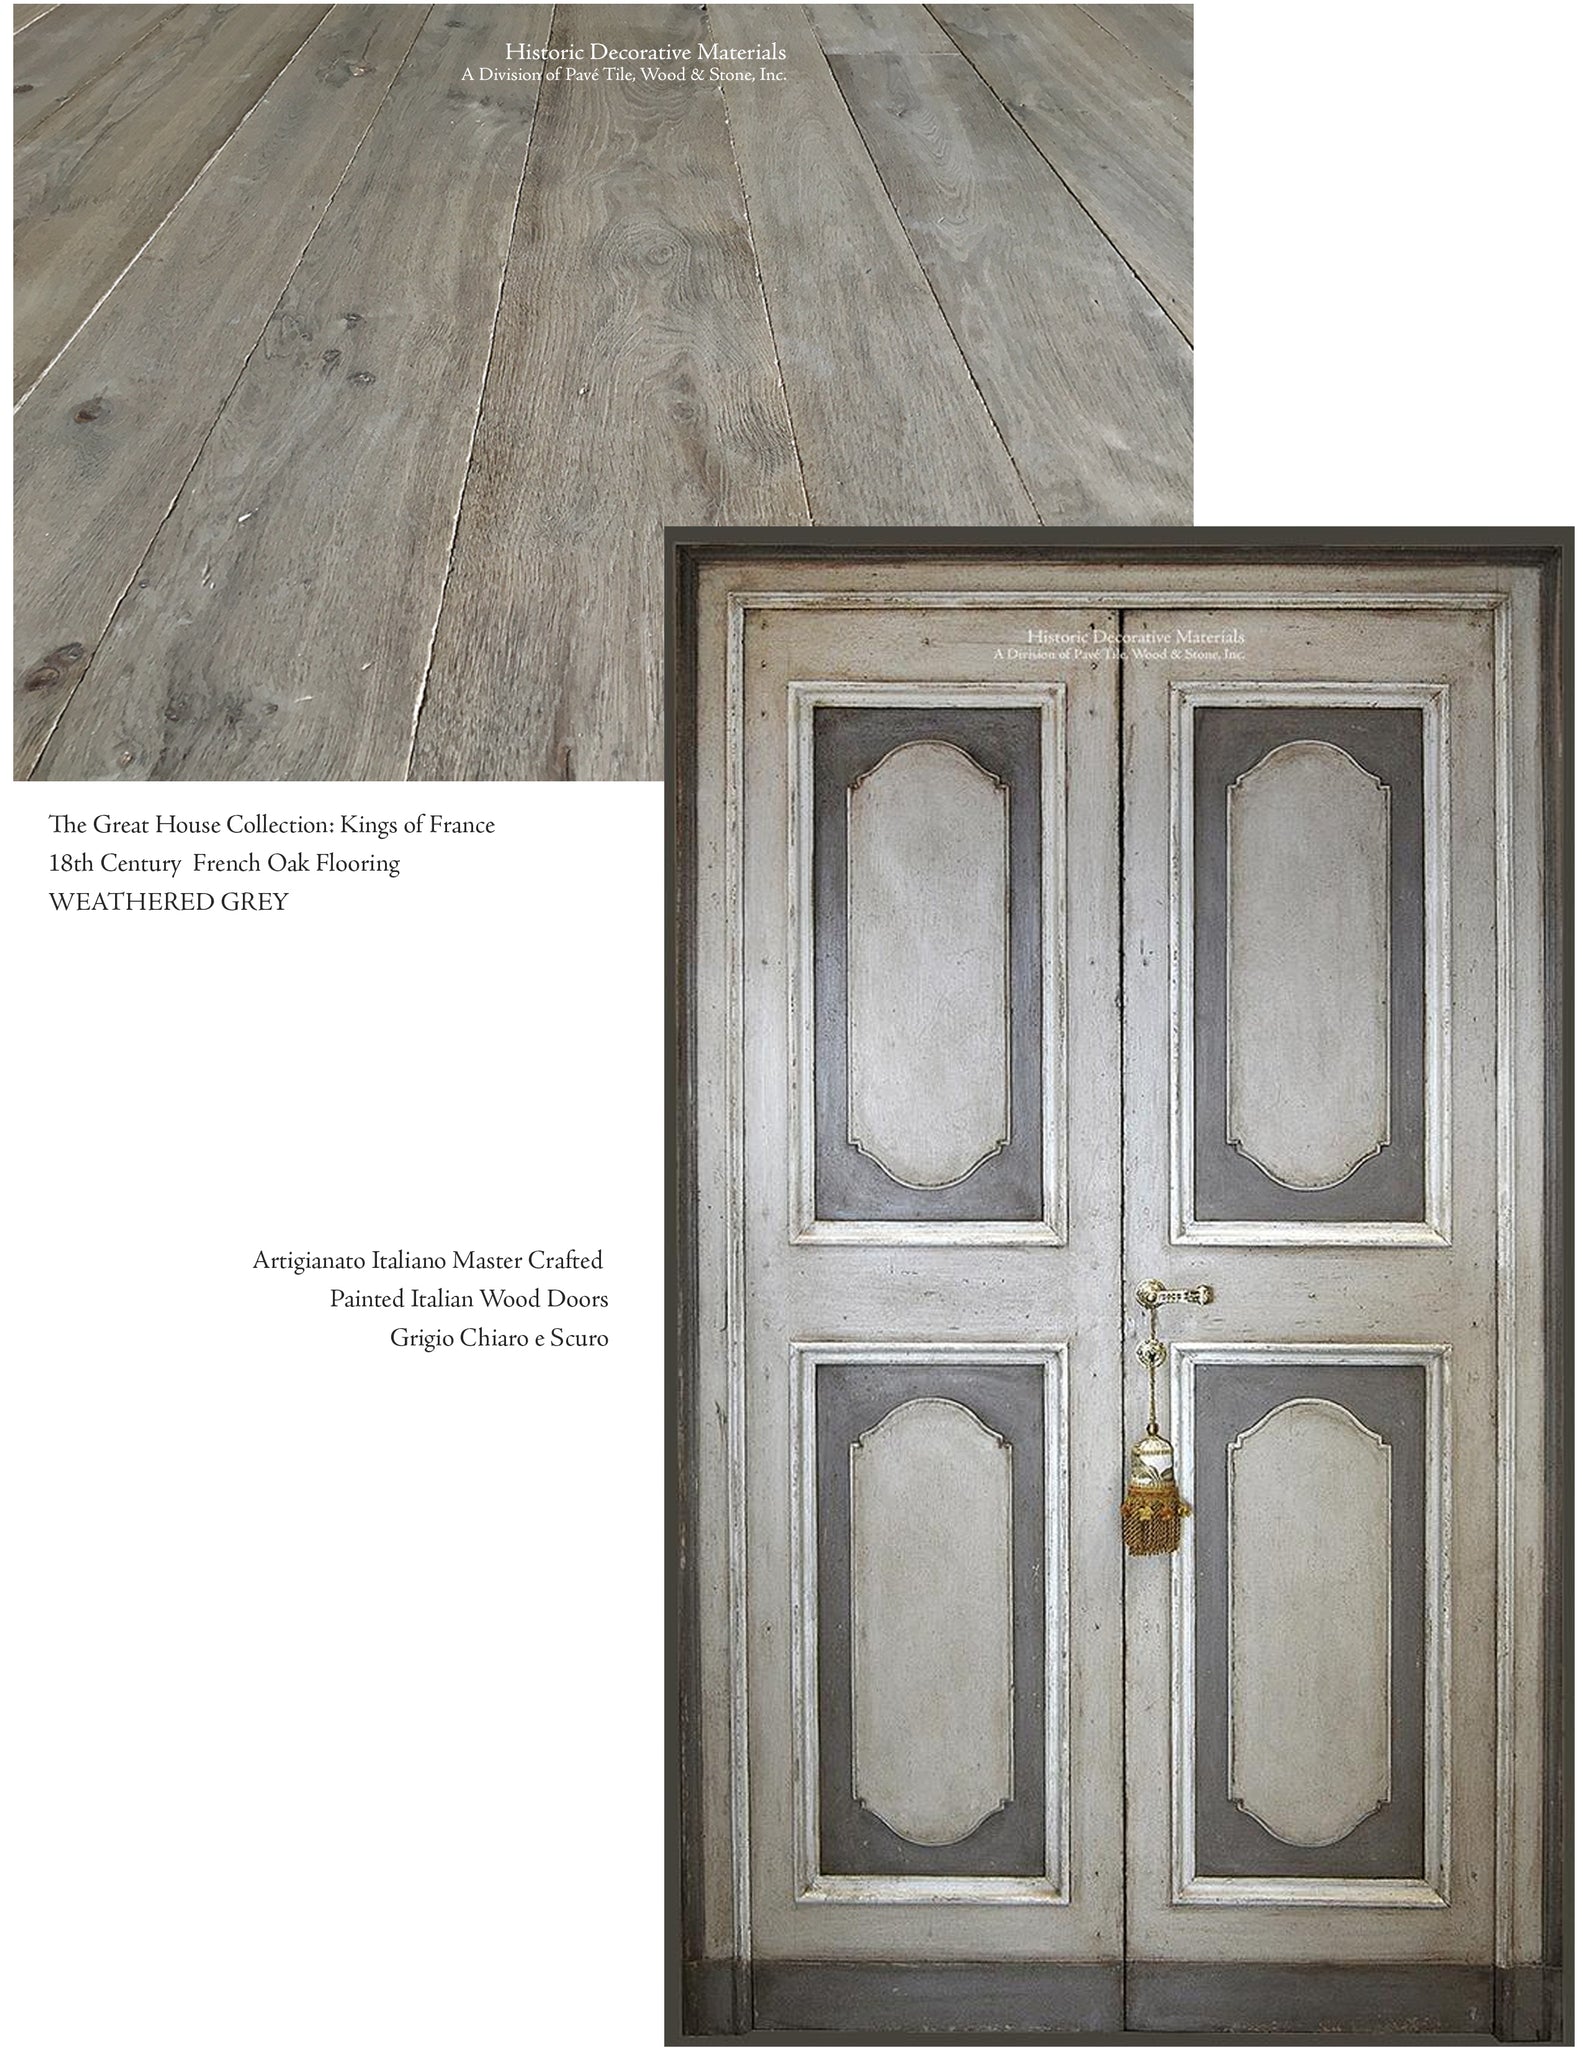 french oak floors and hand painted Italian doors